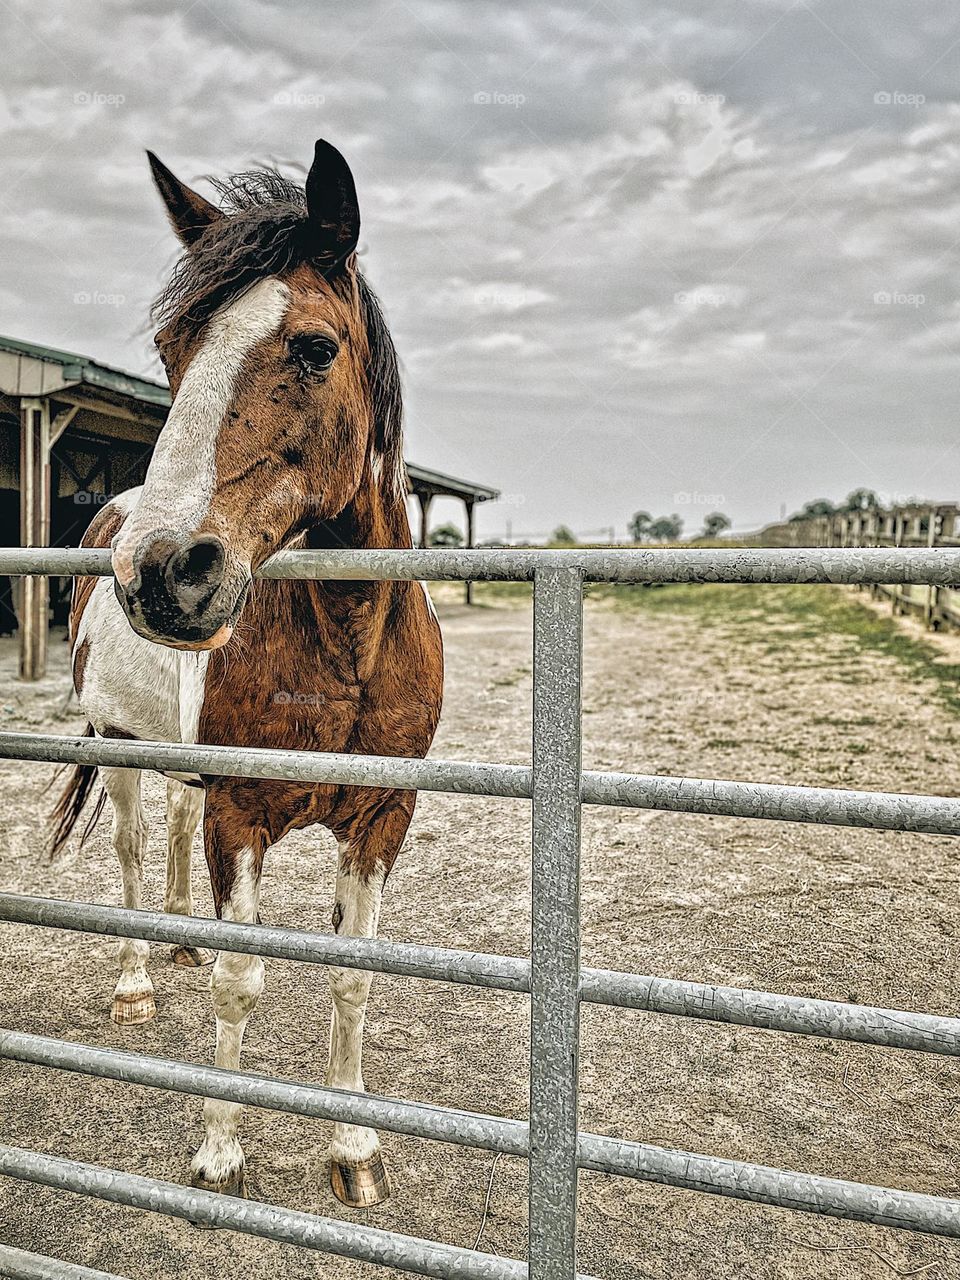 Horse on a farm, horses in Pennsylvania, horse comes towards camera, horse is not camera shy, boarding horses on a farm 